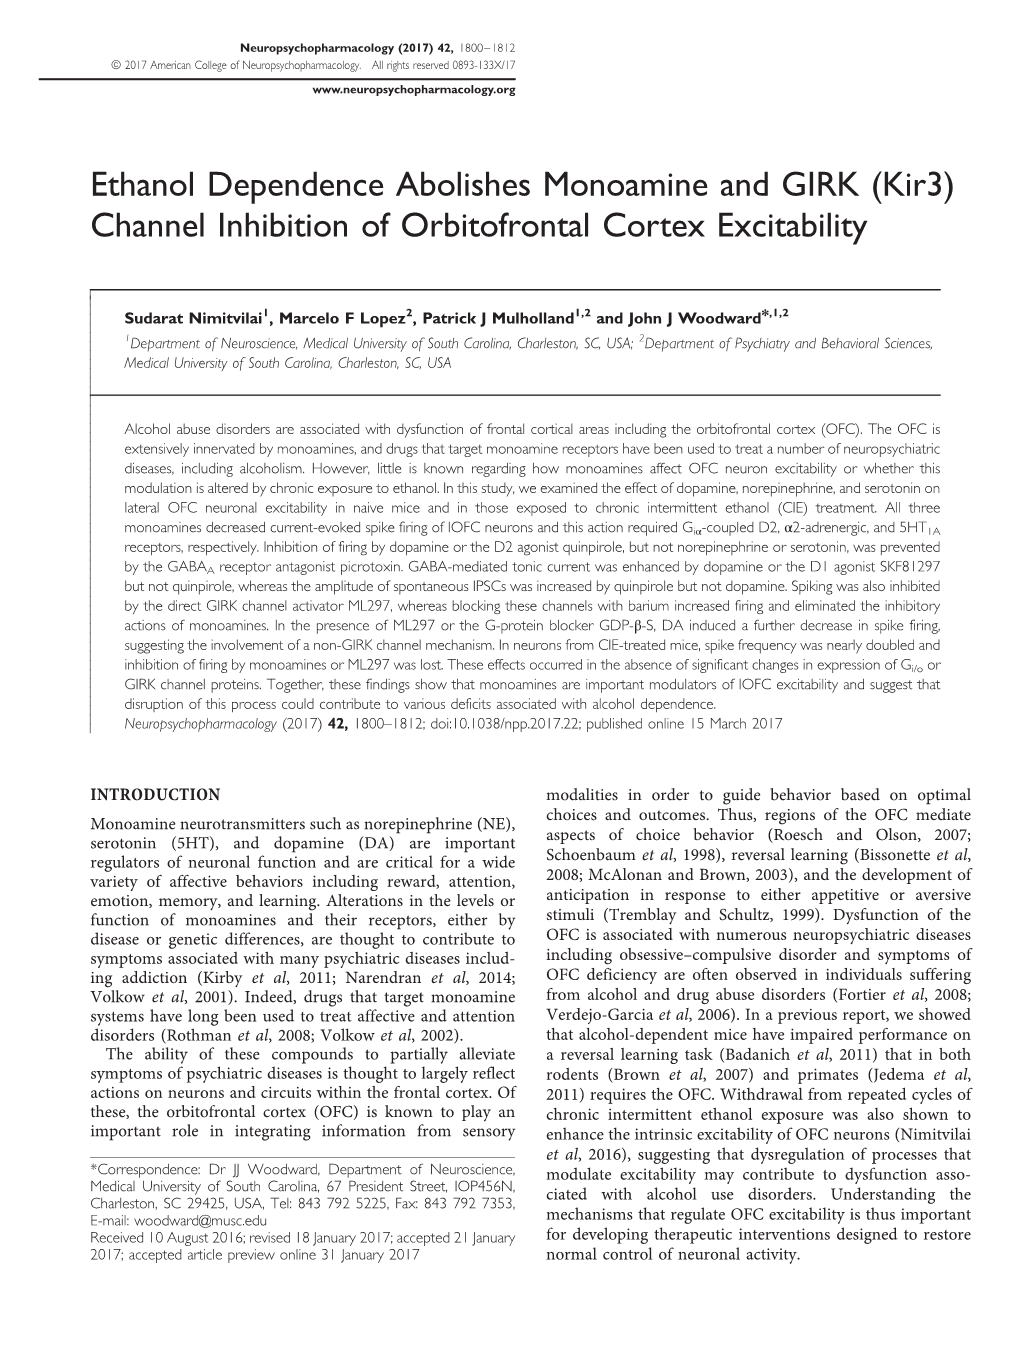 (Kir3) Channel Inhibition of Orbitofrontal Cortex Excitability